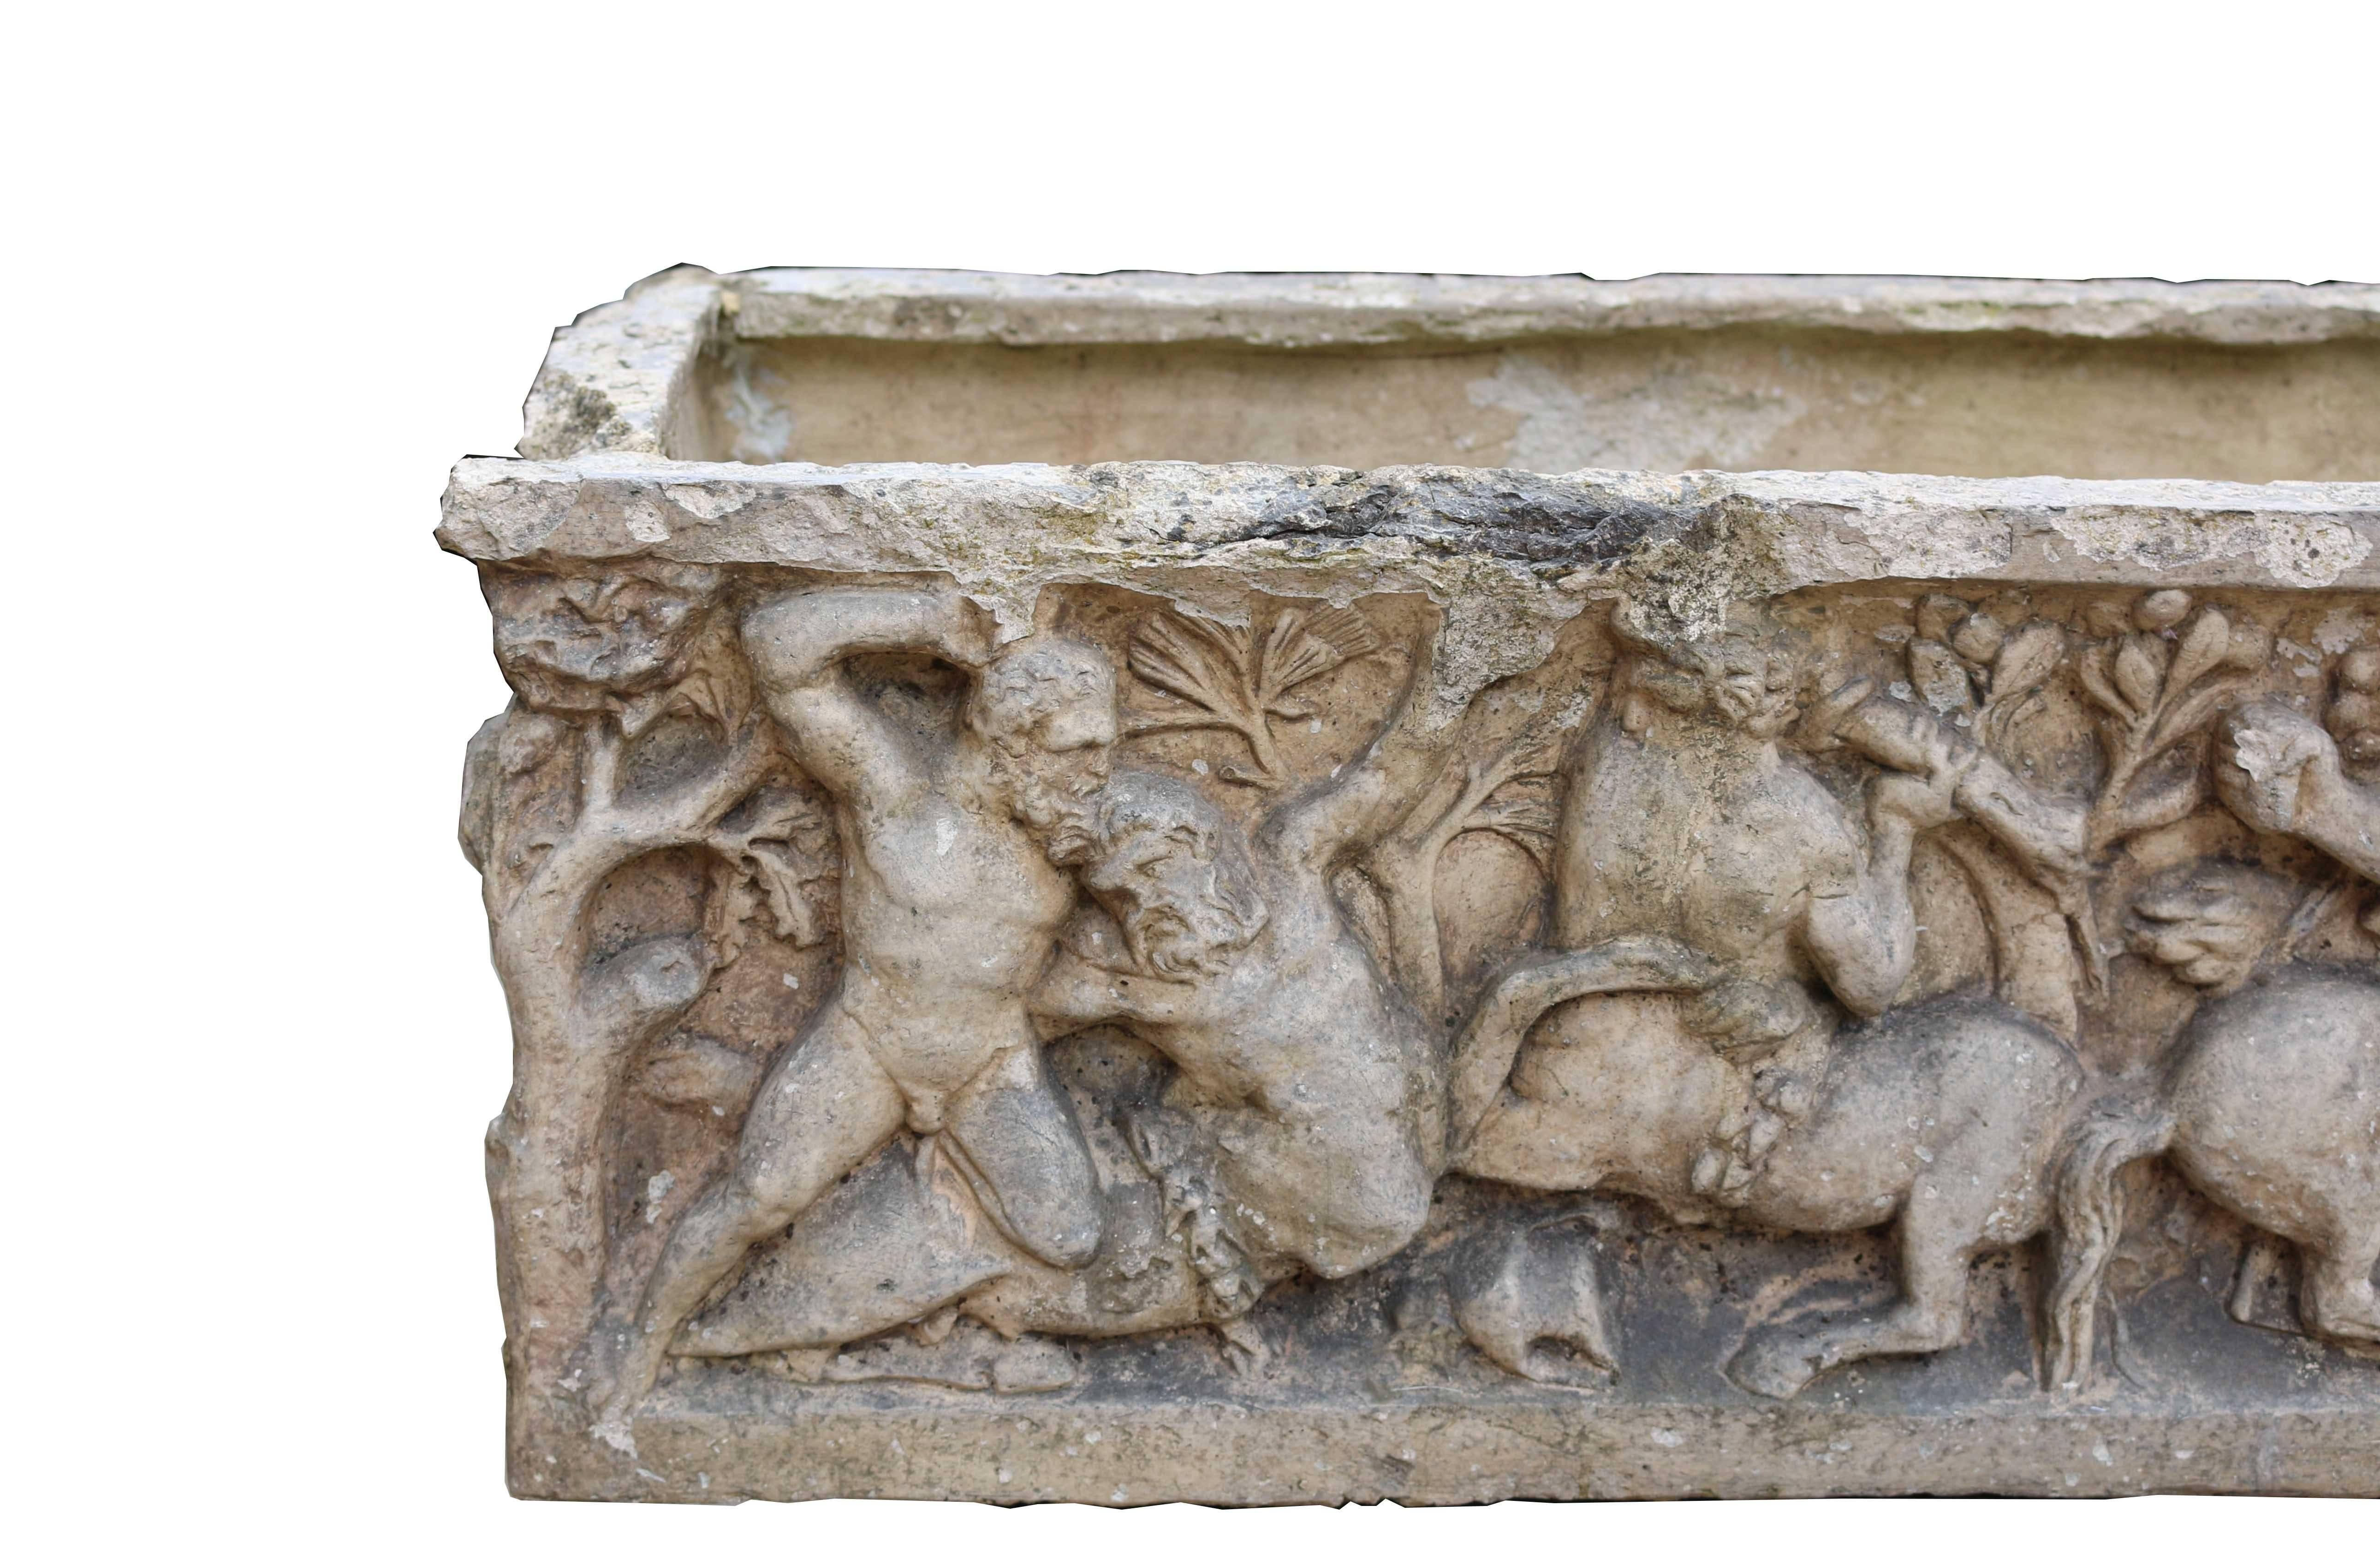 European Classical Greek/ Roman Style Sarcophagus Depicting a Battle Scene